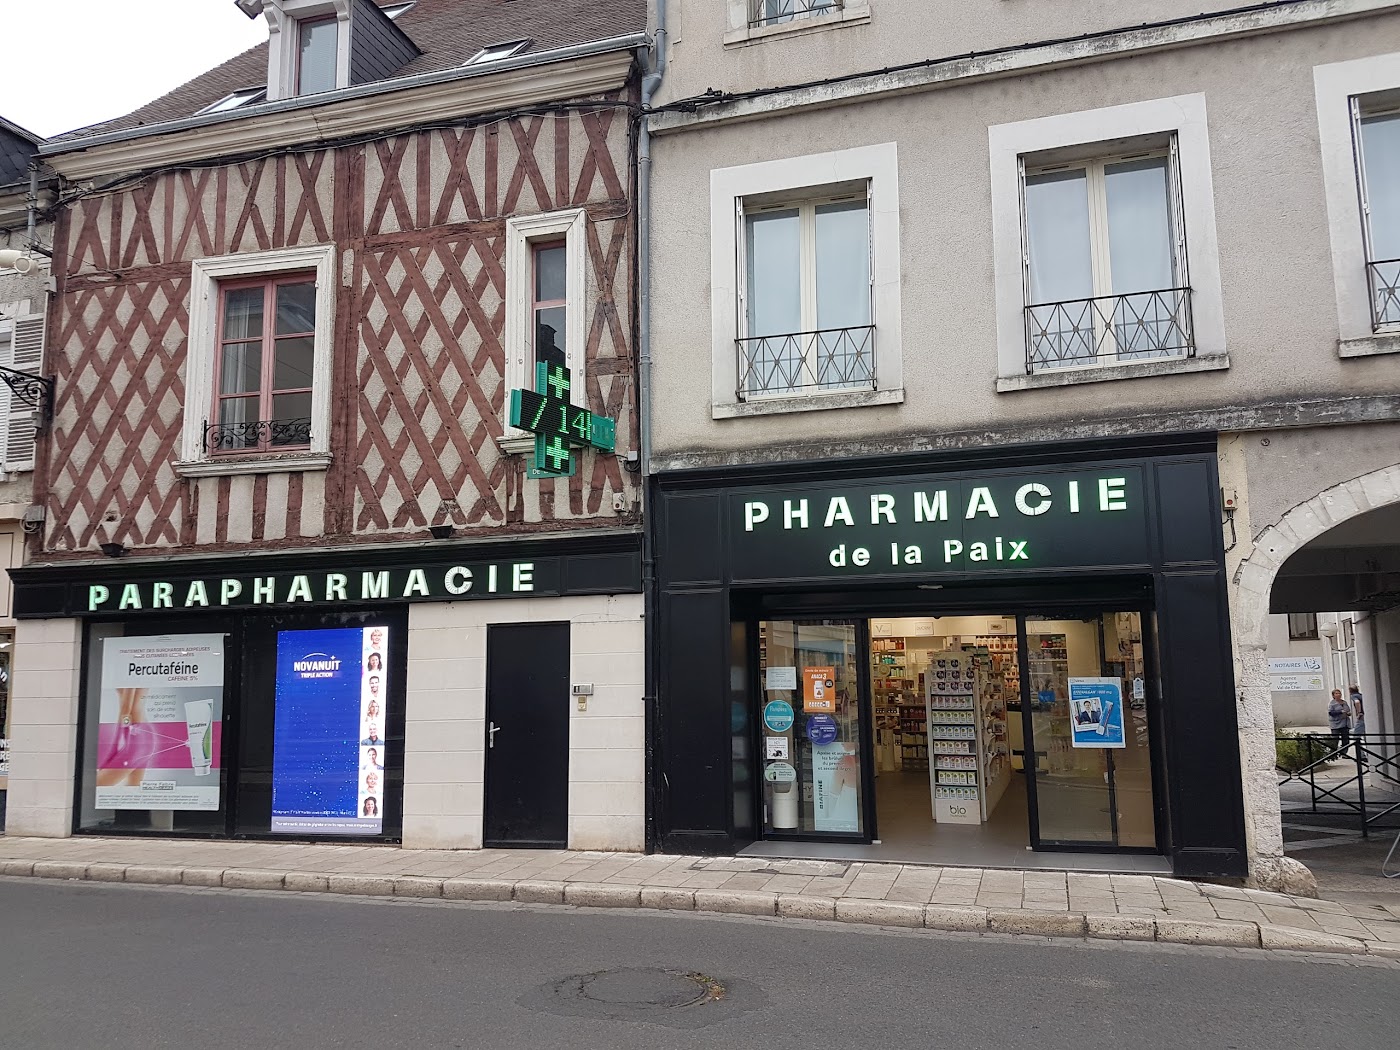 Pharmacie de la Paix (Pharmacie Boissay-Bourdin)